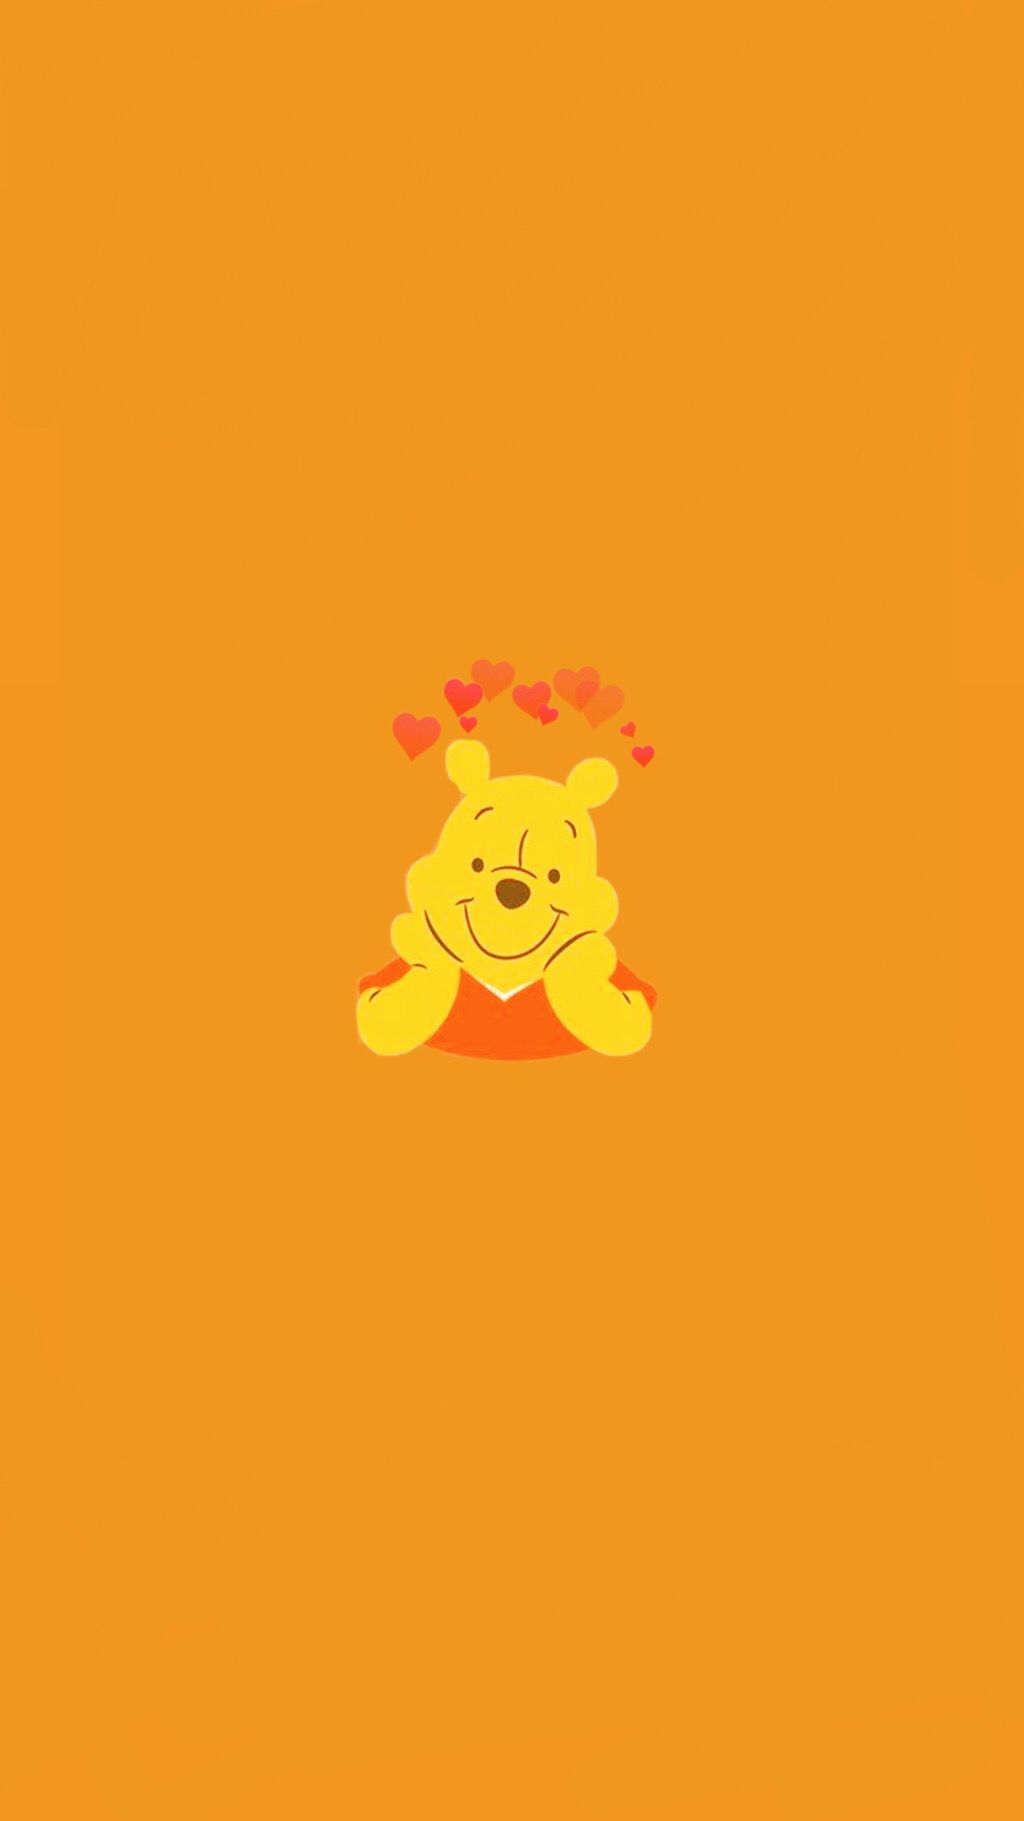 Winnie the Pooh Wallpaper #winniethepooh #wallpaper #cute